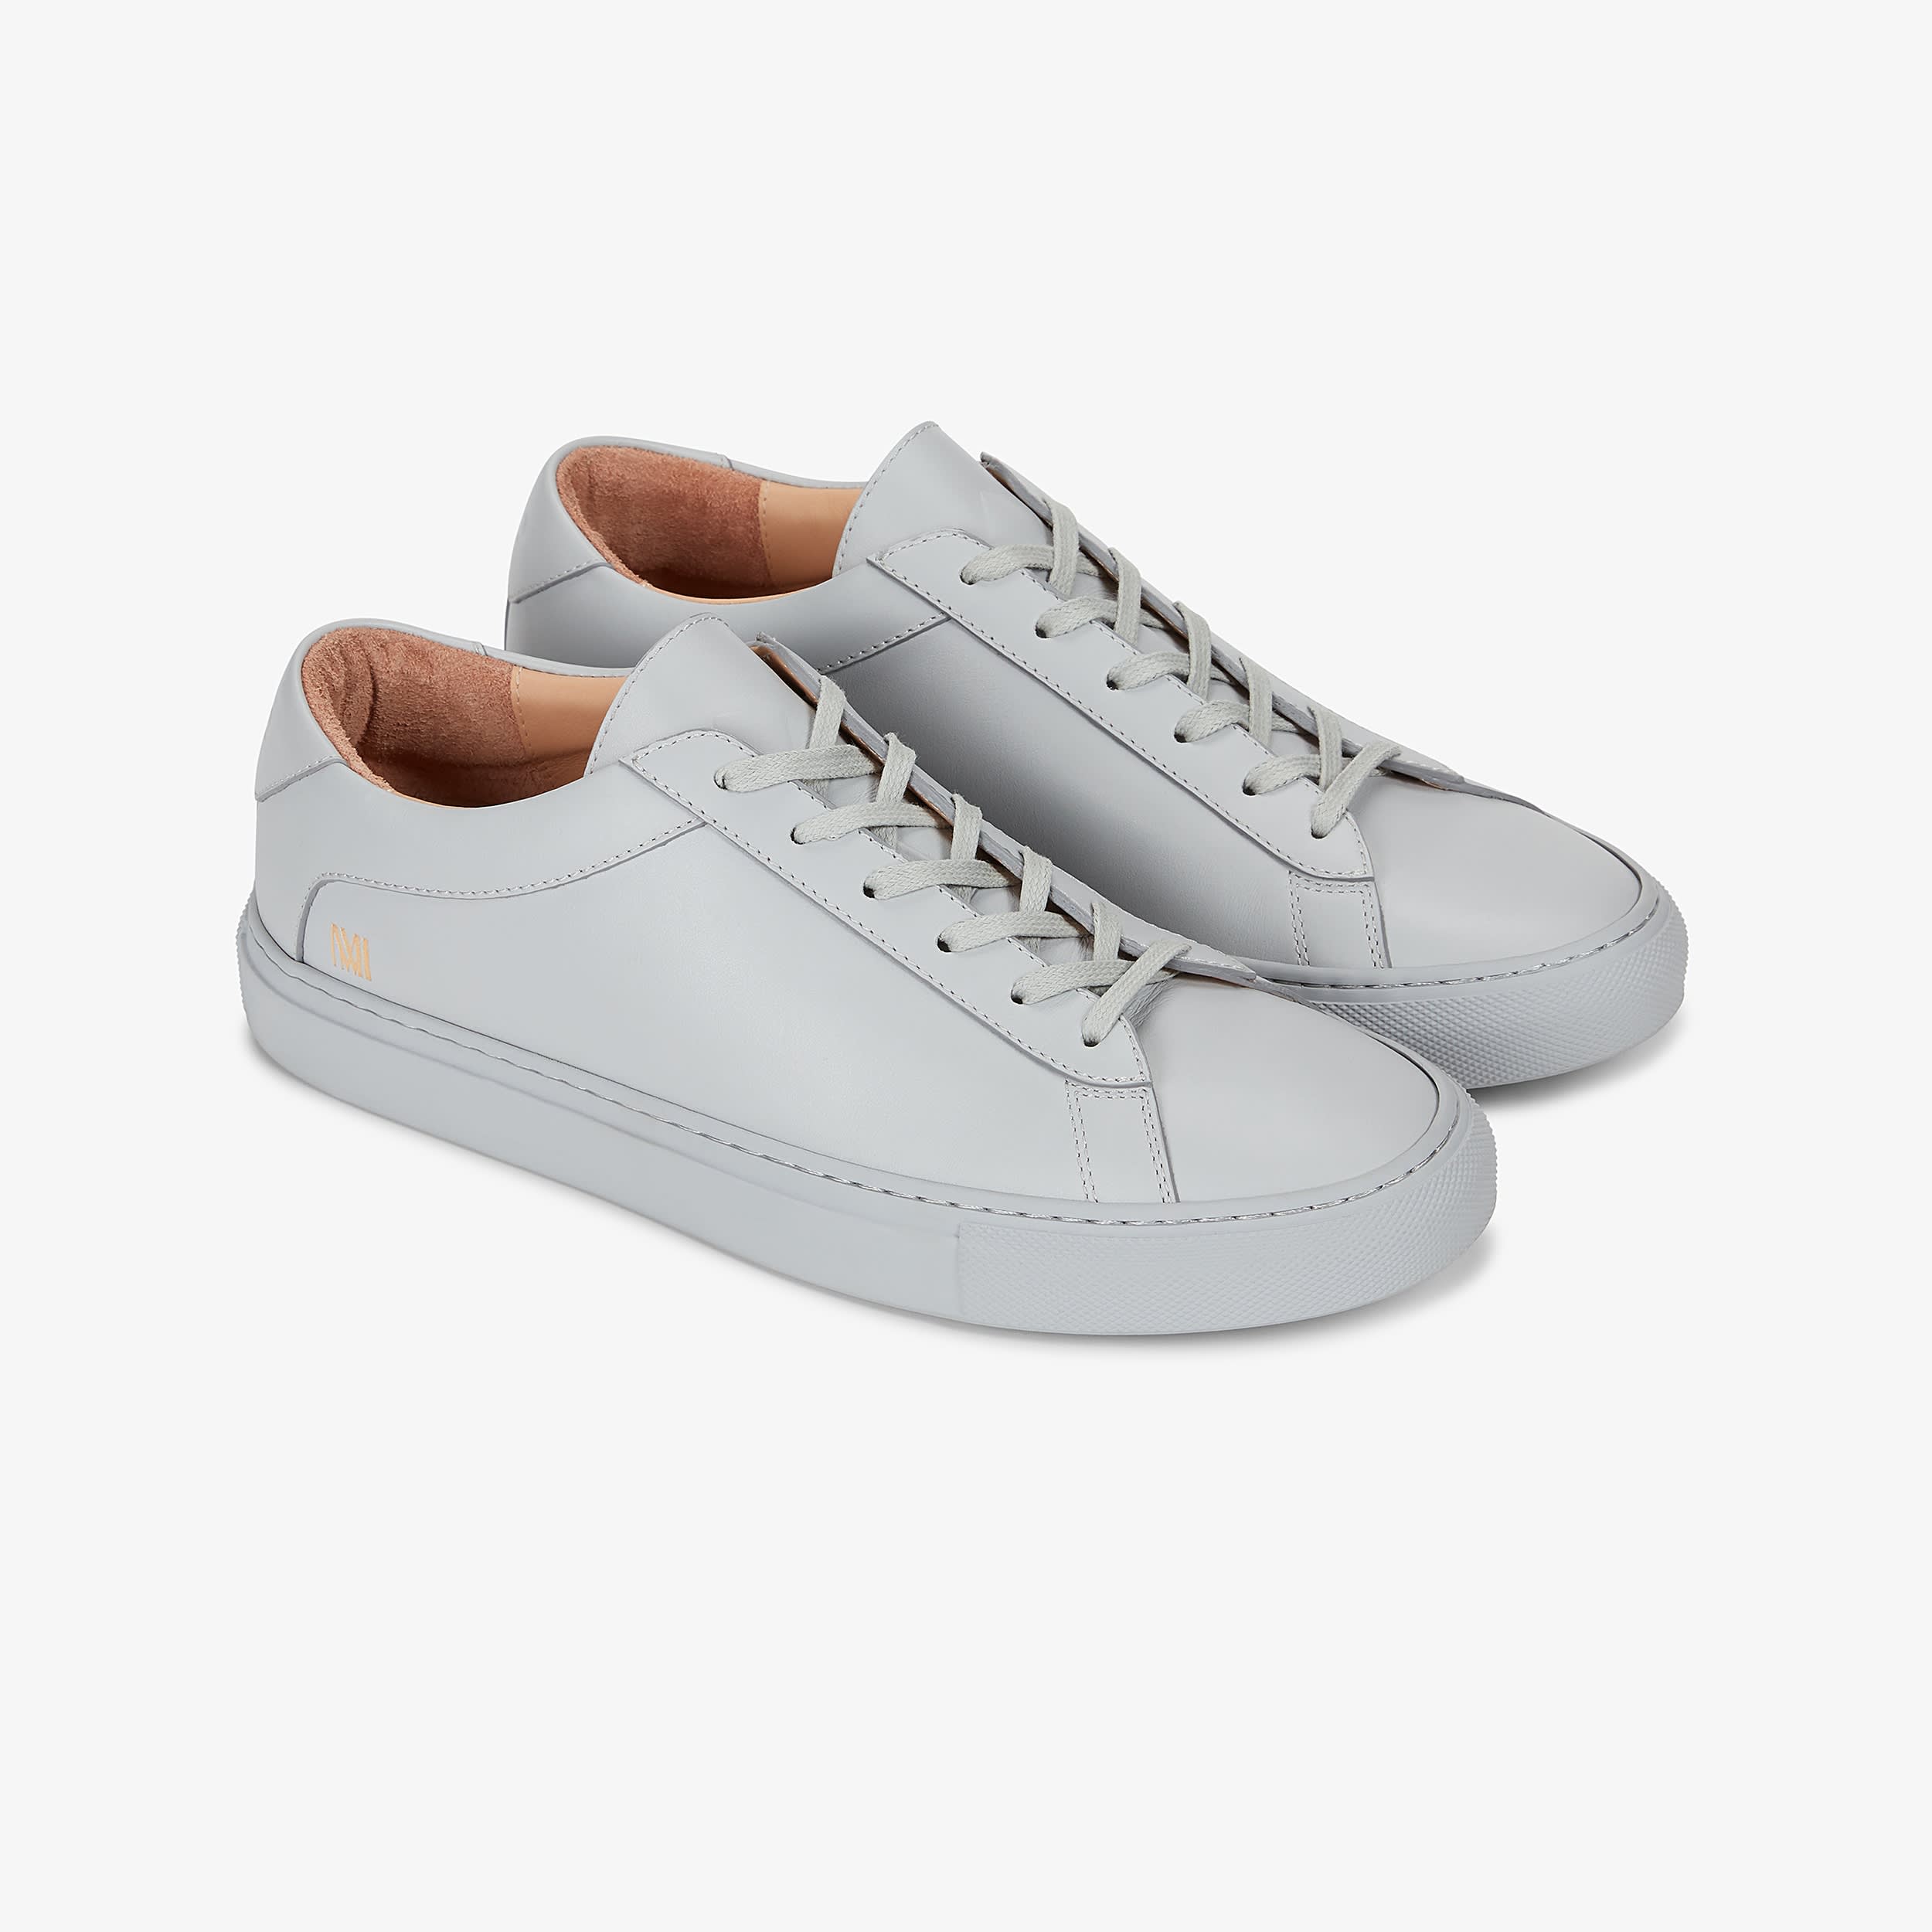 M.M.LaFleur x Koio Low-Top Sneakers - Leather :: Smoke